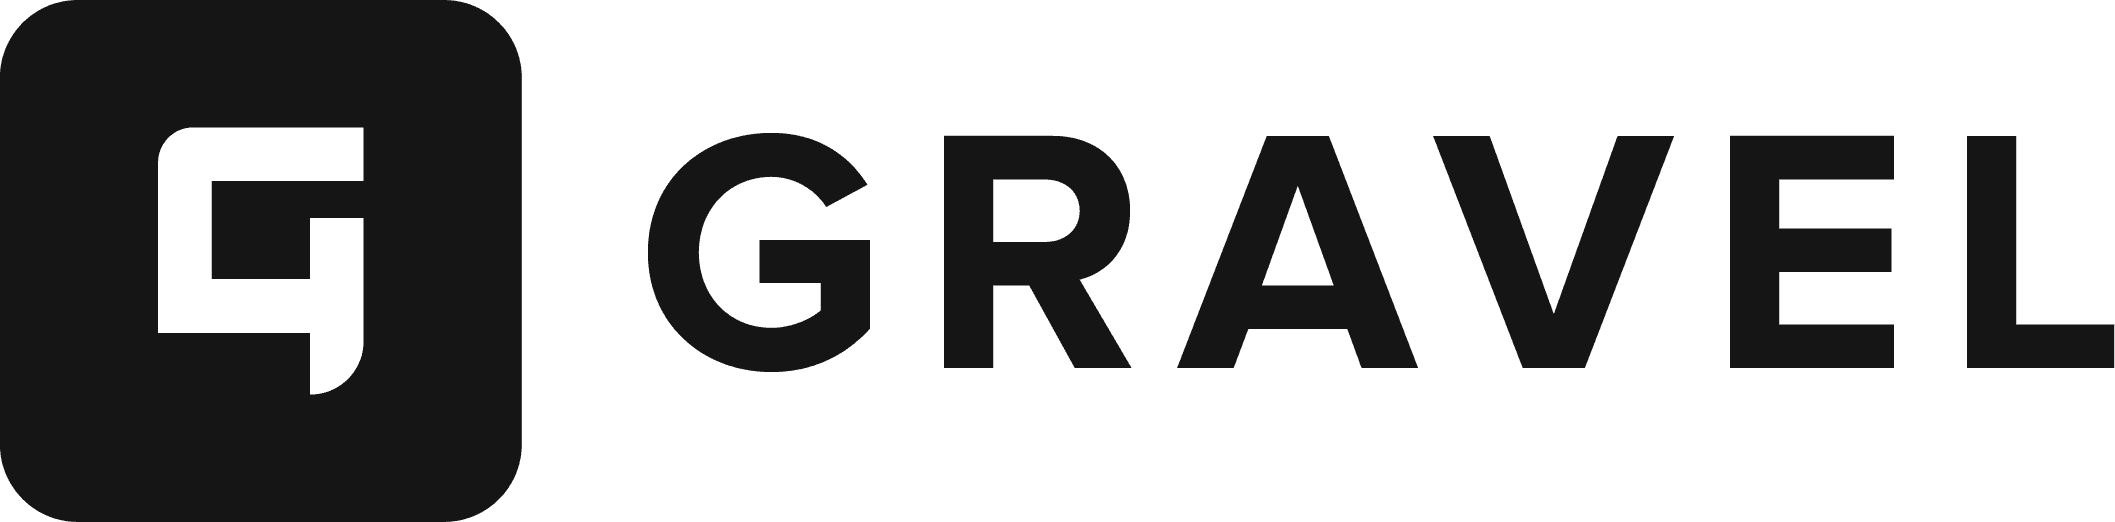 gravel indonesia logo